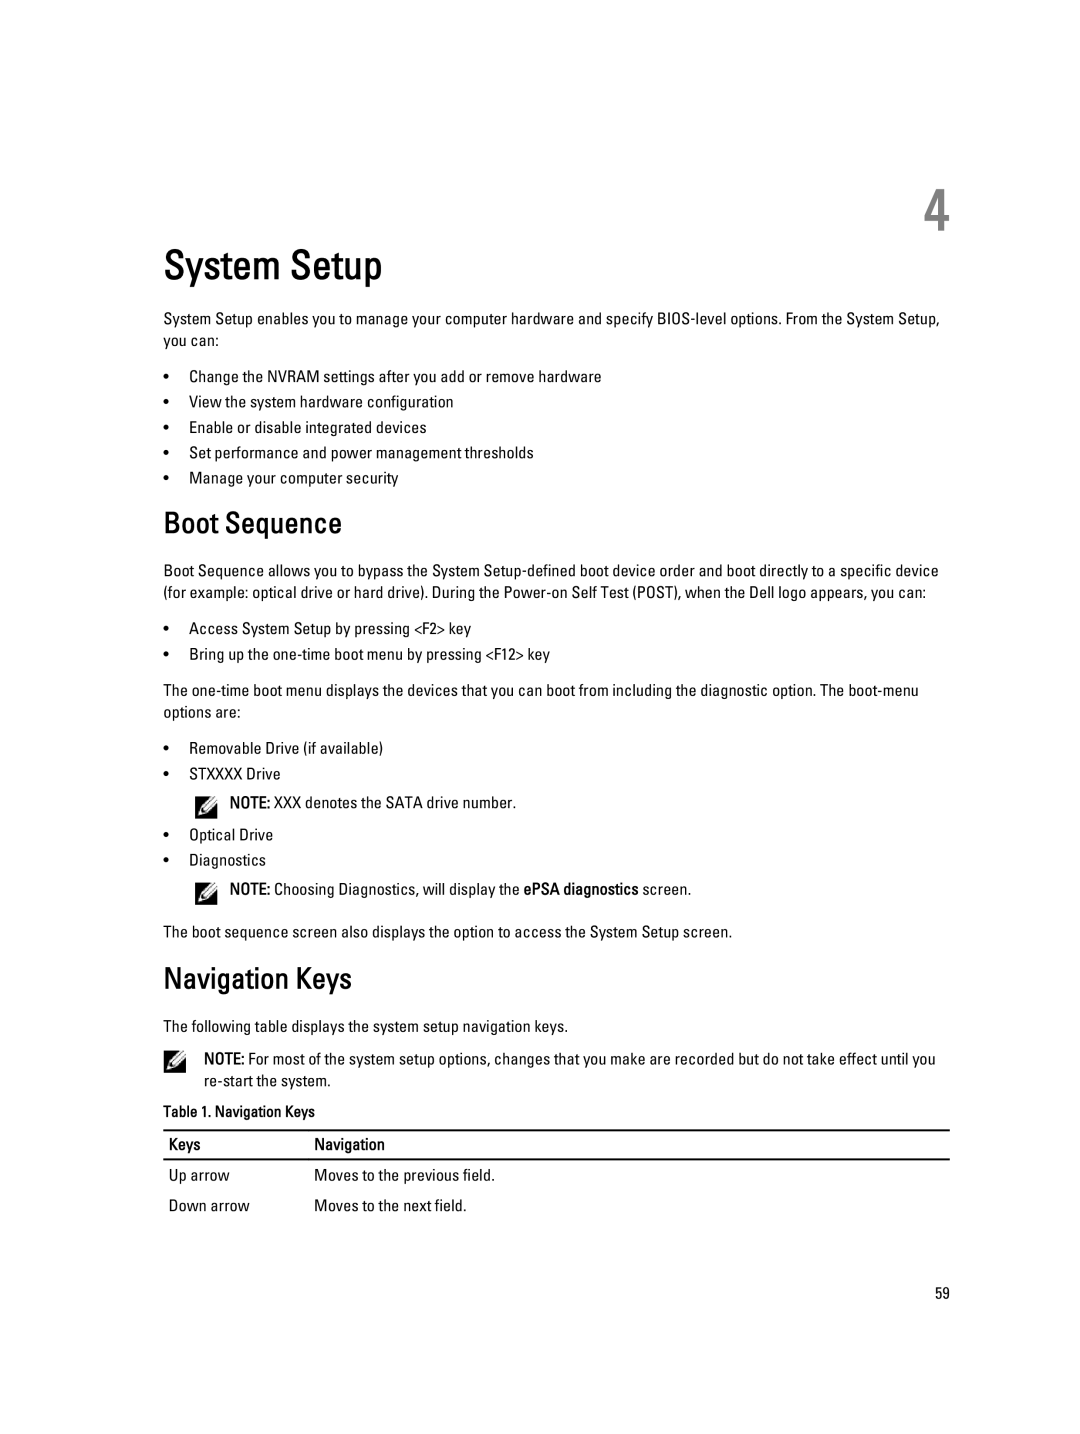 Dell E6230 owner manual Boot Sequence, Navigation Keys, Keys Navigation 